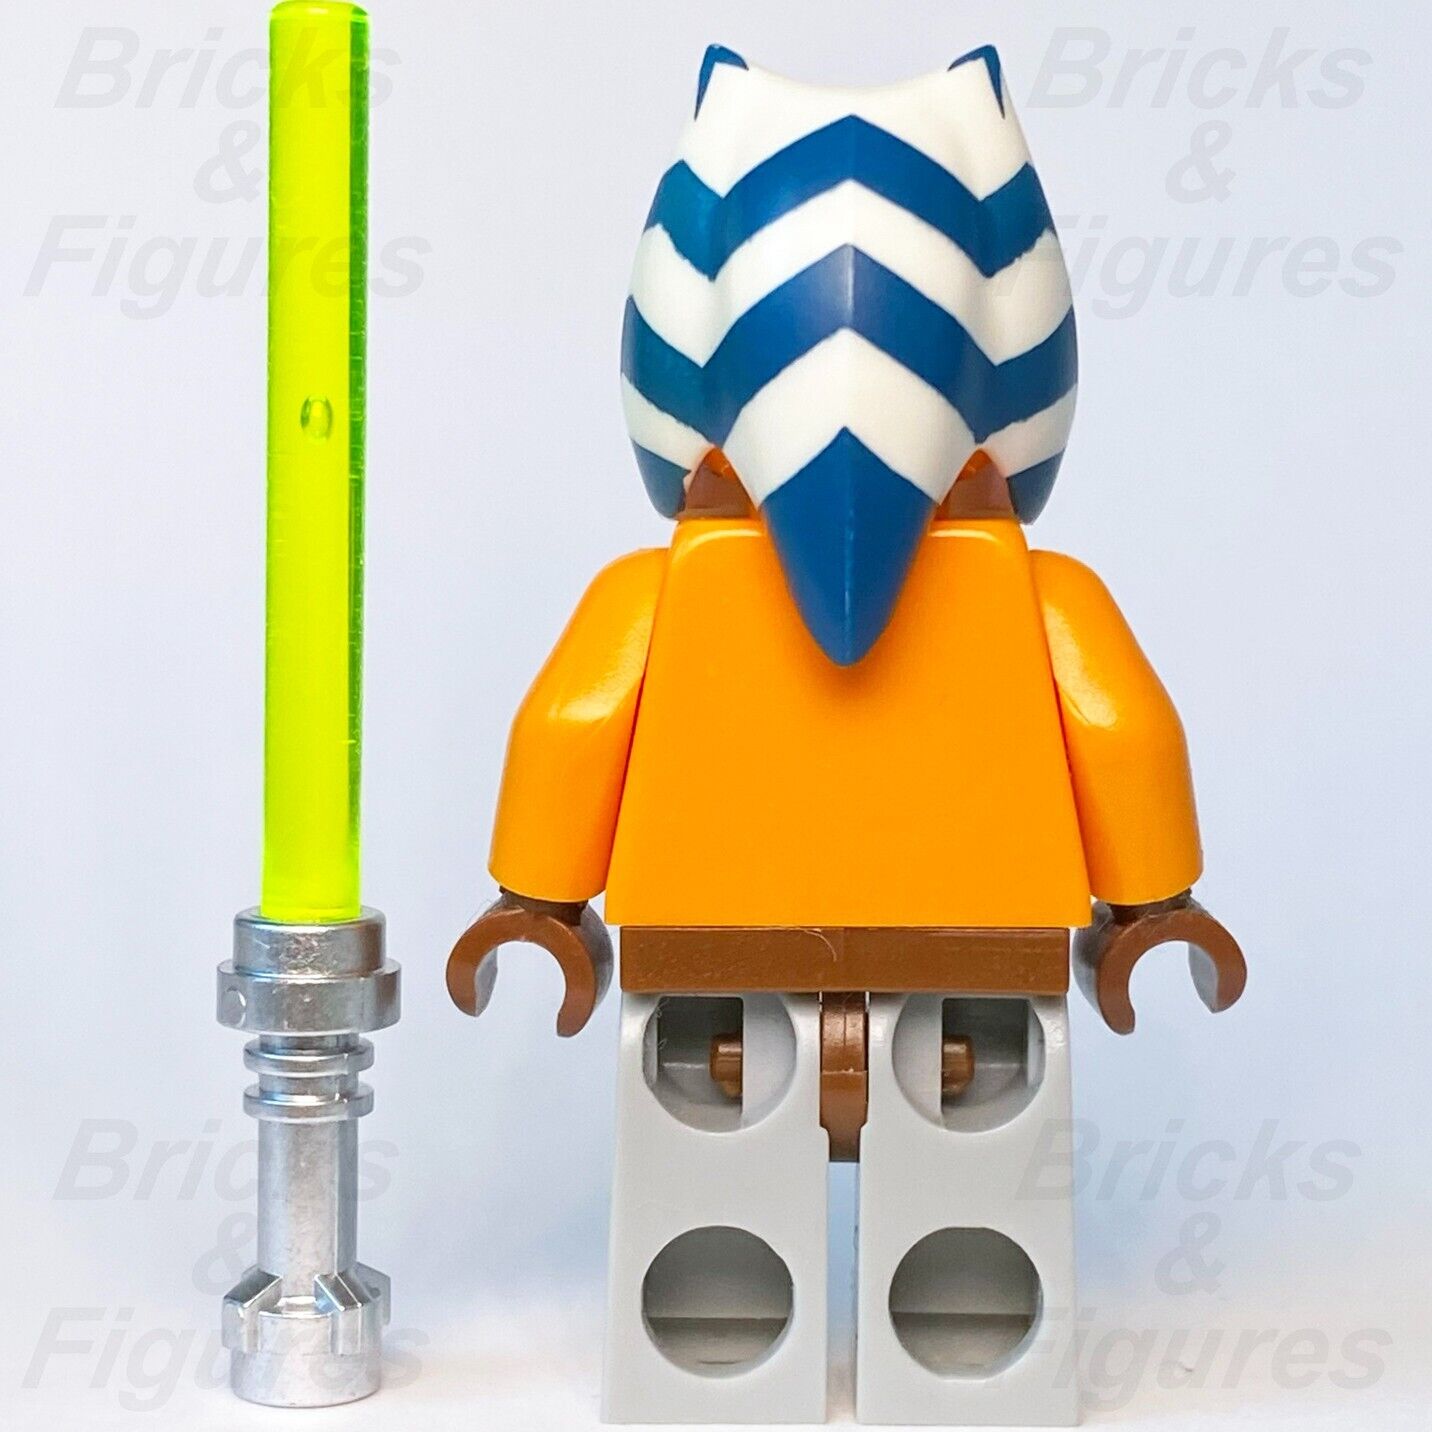 LEGO Star Wars Ahsoka Tano Minifigure Jedi Padawan The Clone Wars 7751 sw0192 3